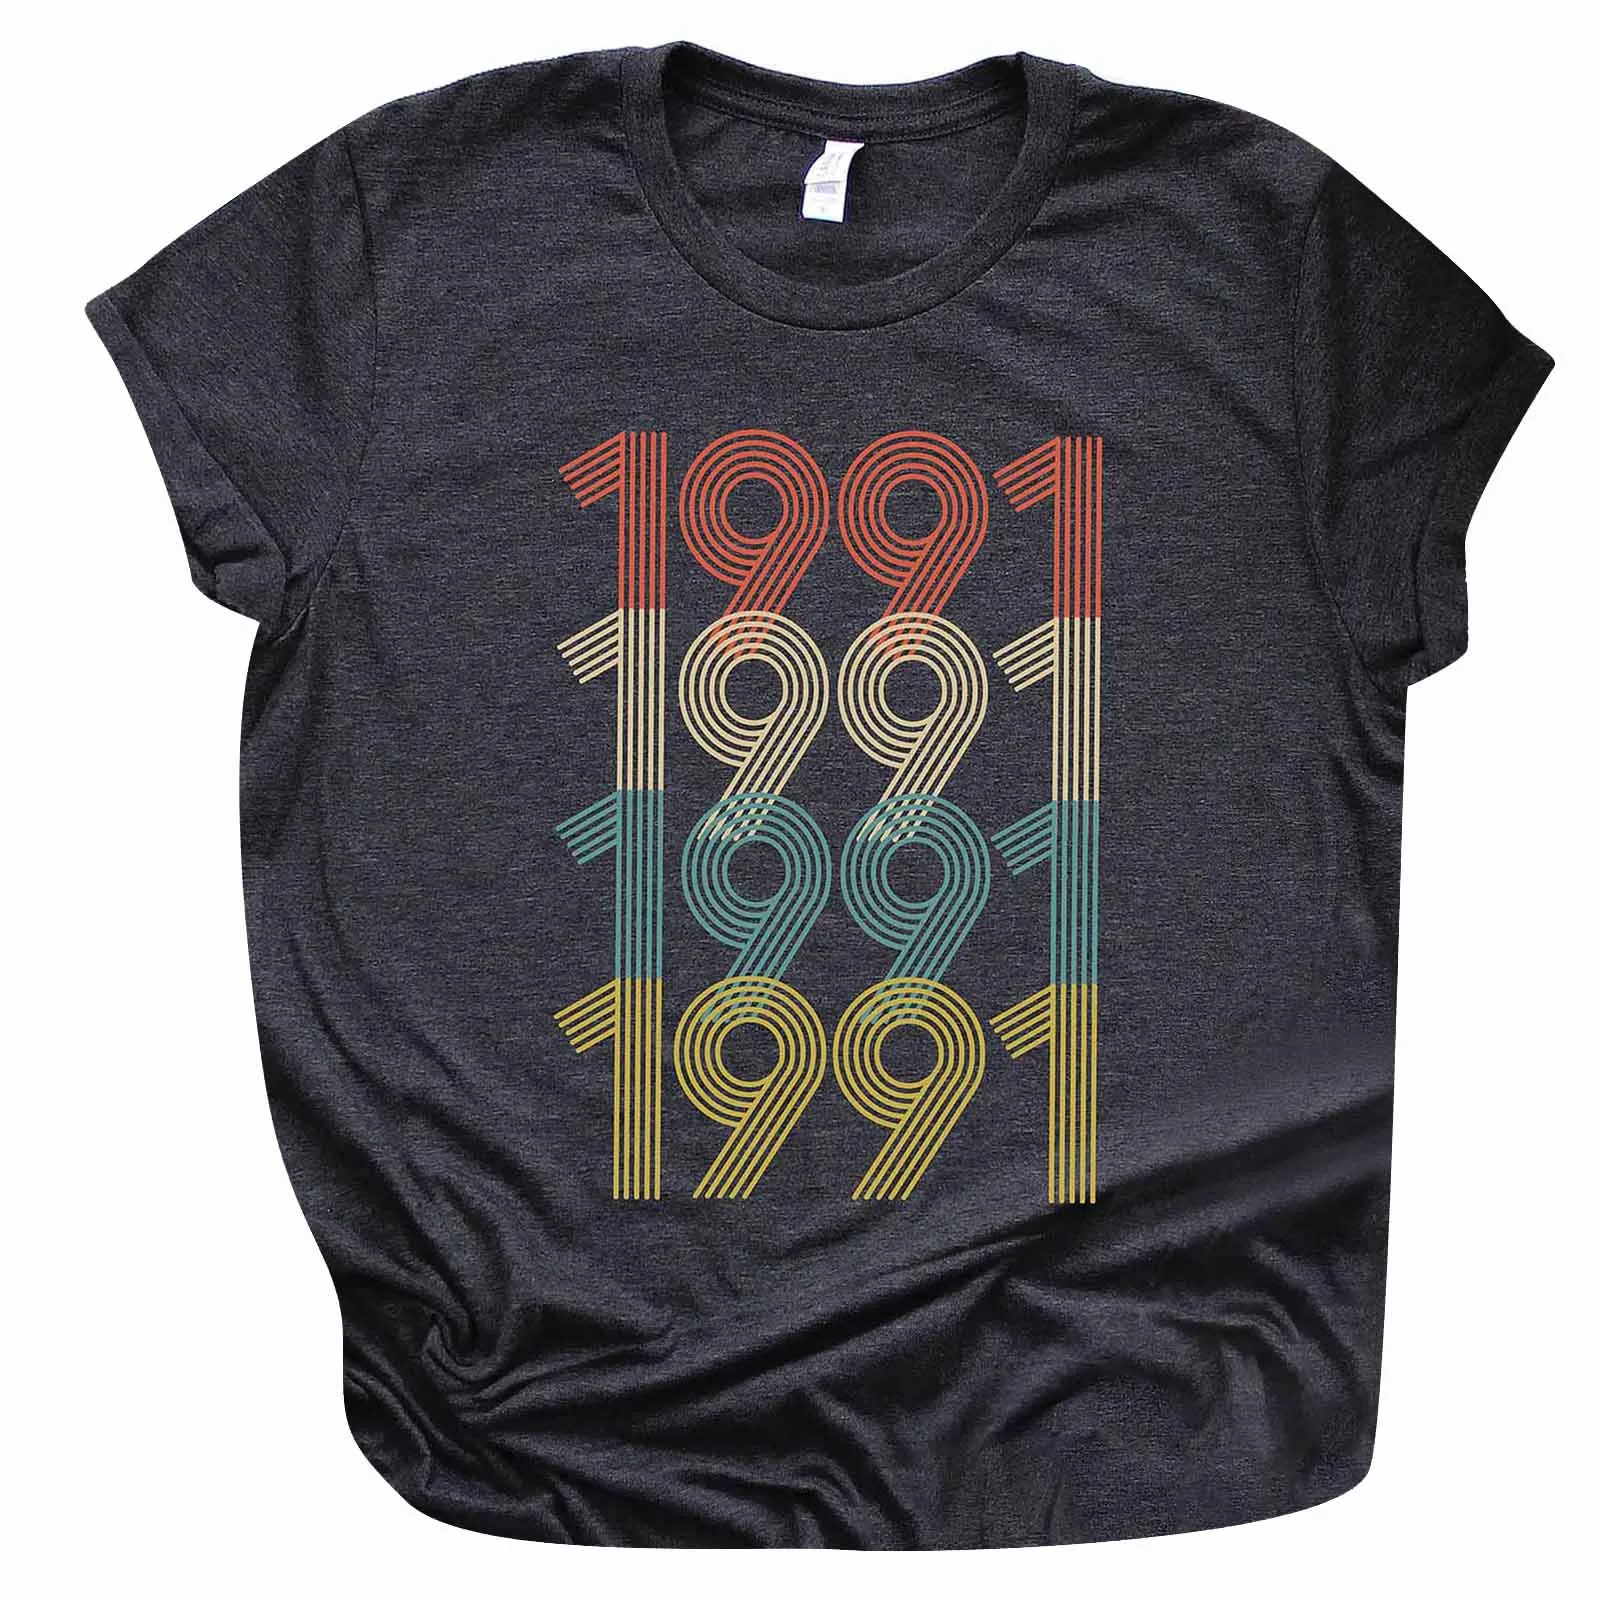 Damska koszulka Casual z prezentem na Urodziny 1991 Original Parts Tee Cute tee woman woman tshirts harajuku women top